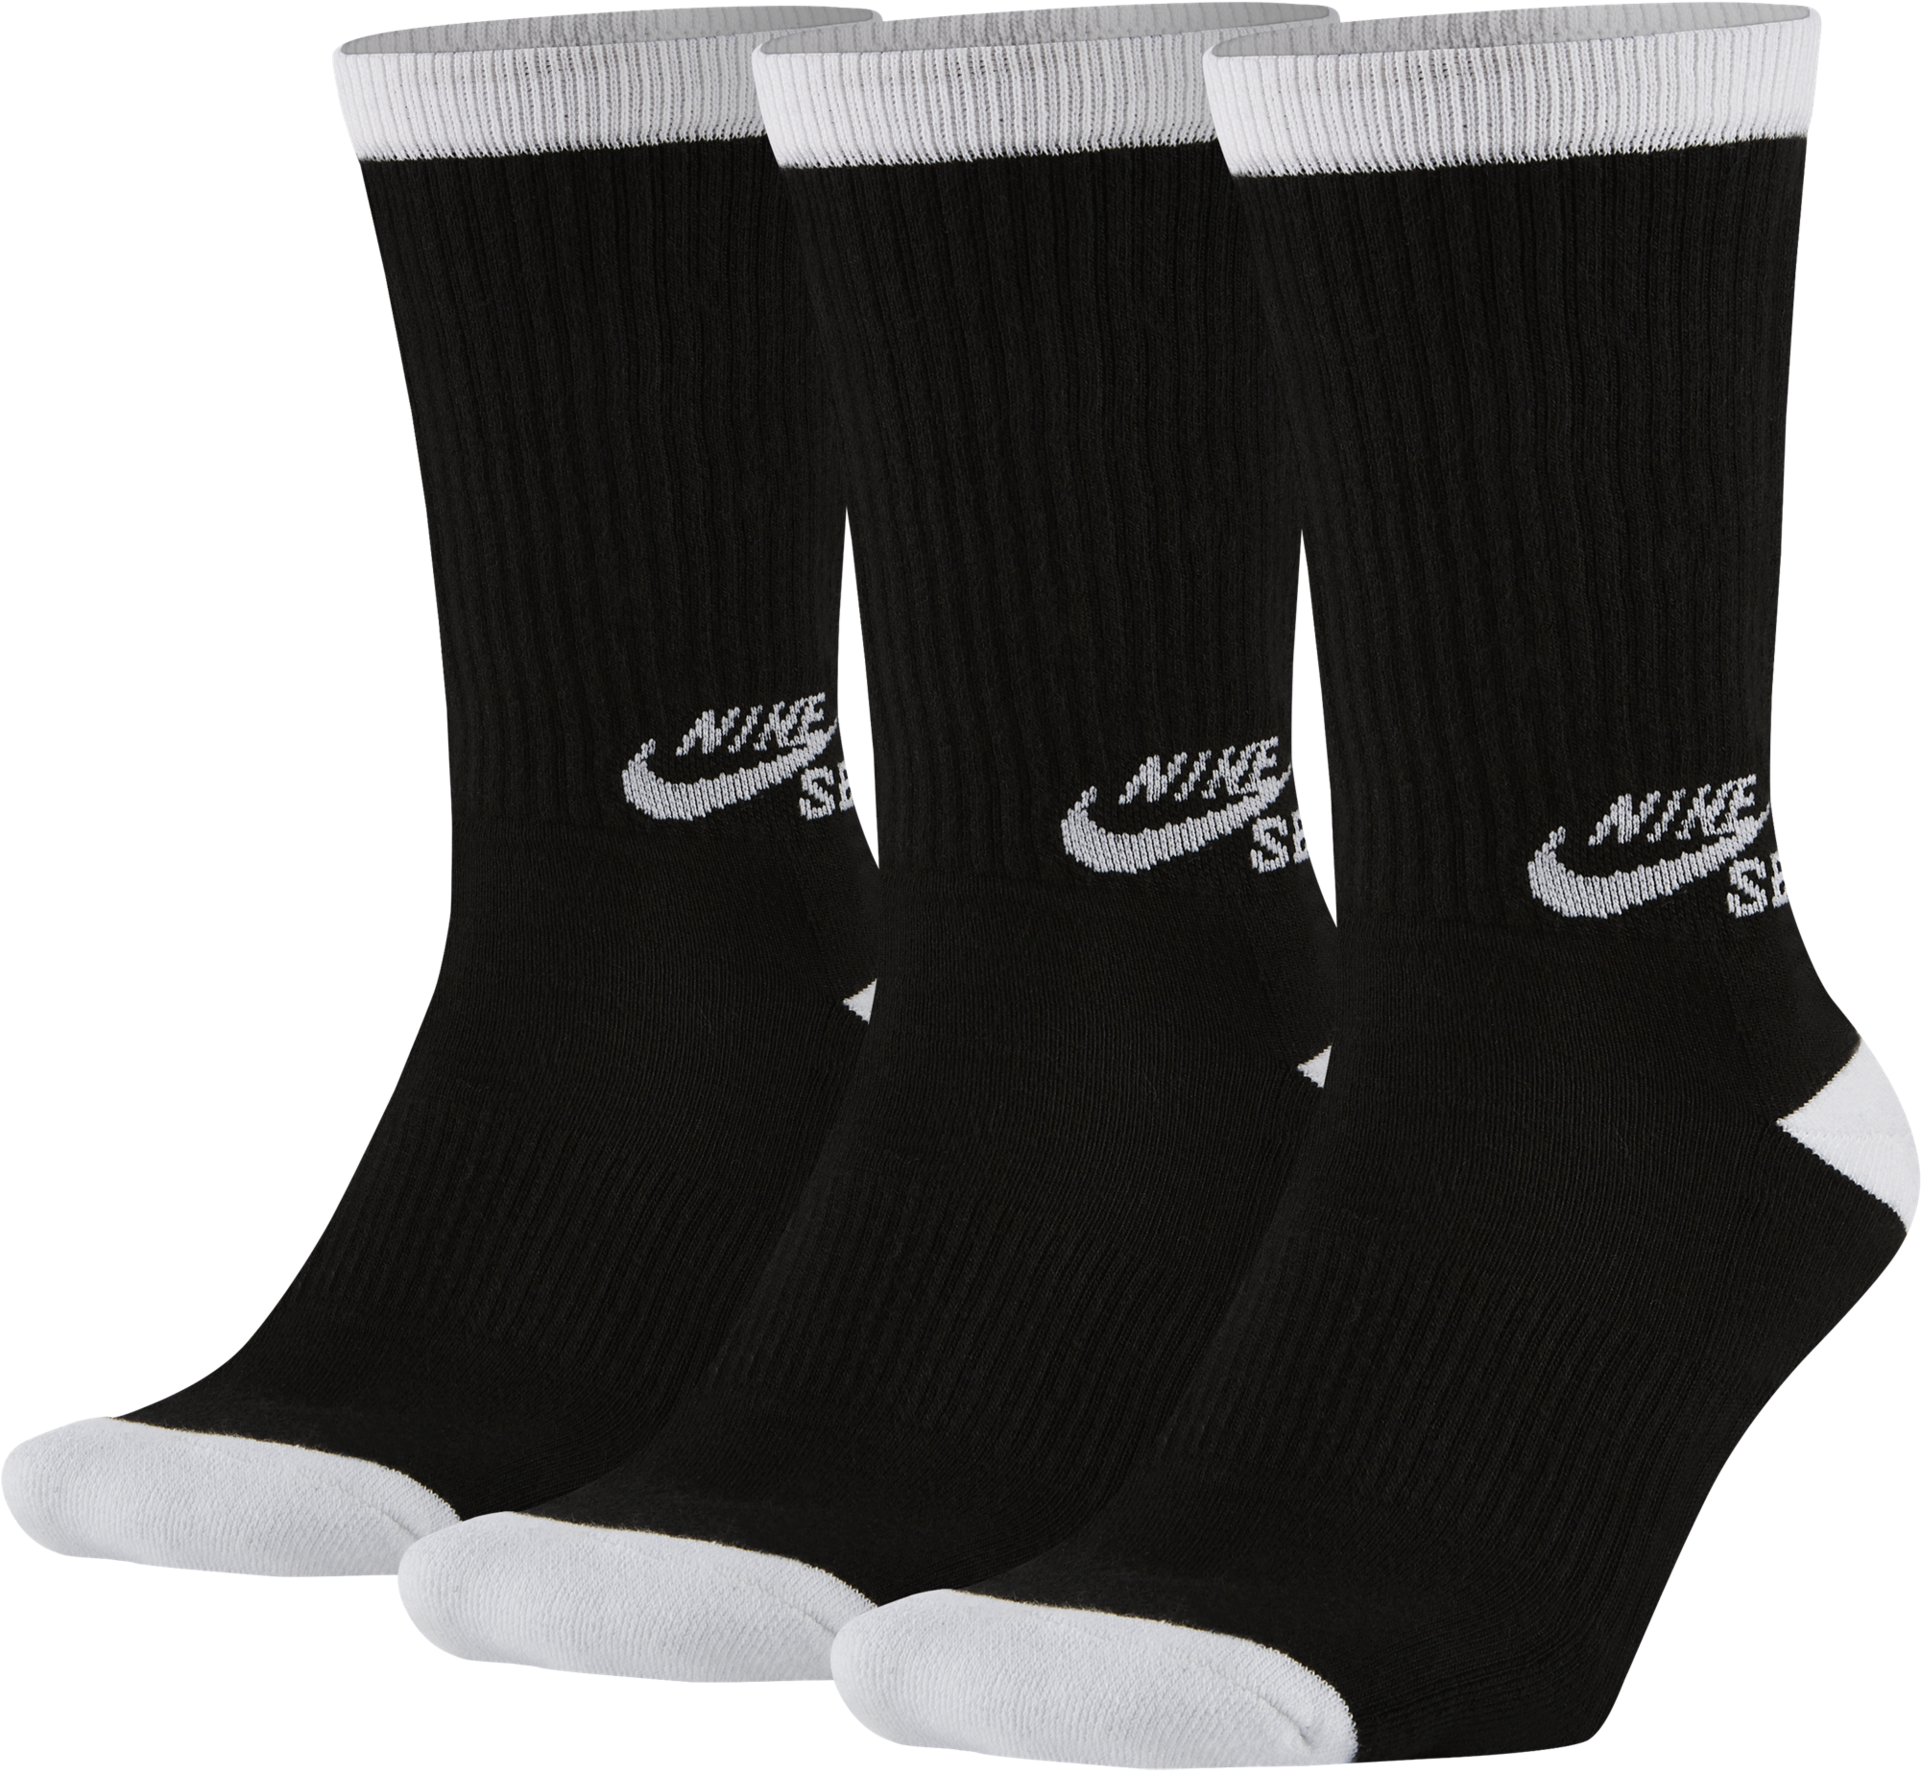 Nike Sb 3pk Crew Socks - Meia Nike Sb Cano Alto (1920x1920), Png Download